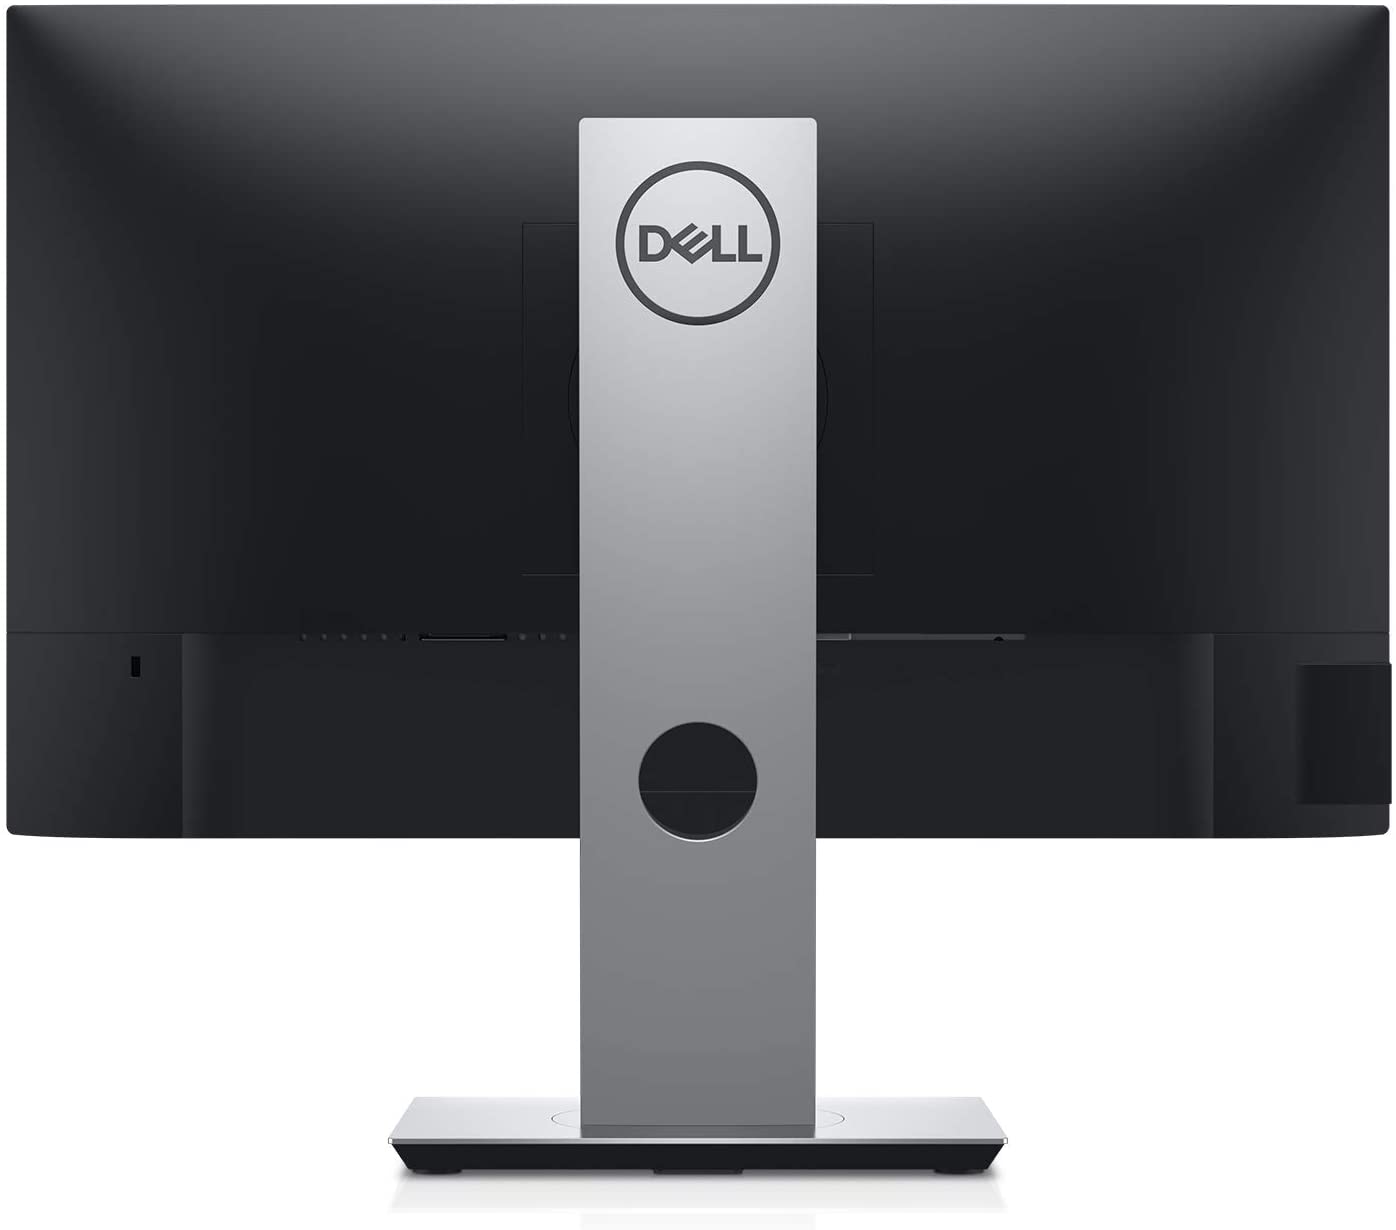 Dell P Series 27" Screen Full Hd Led-Lit Monitor (P2719H)